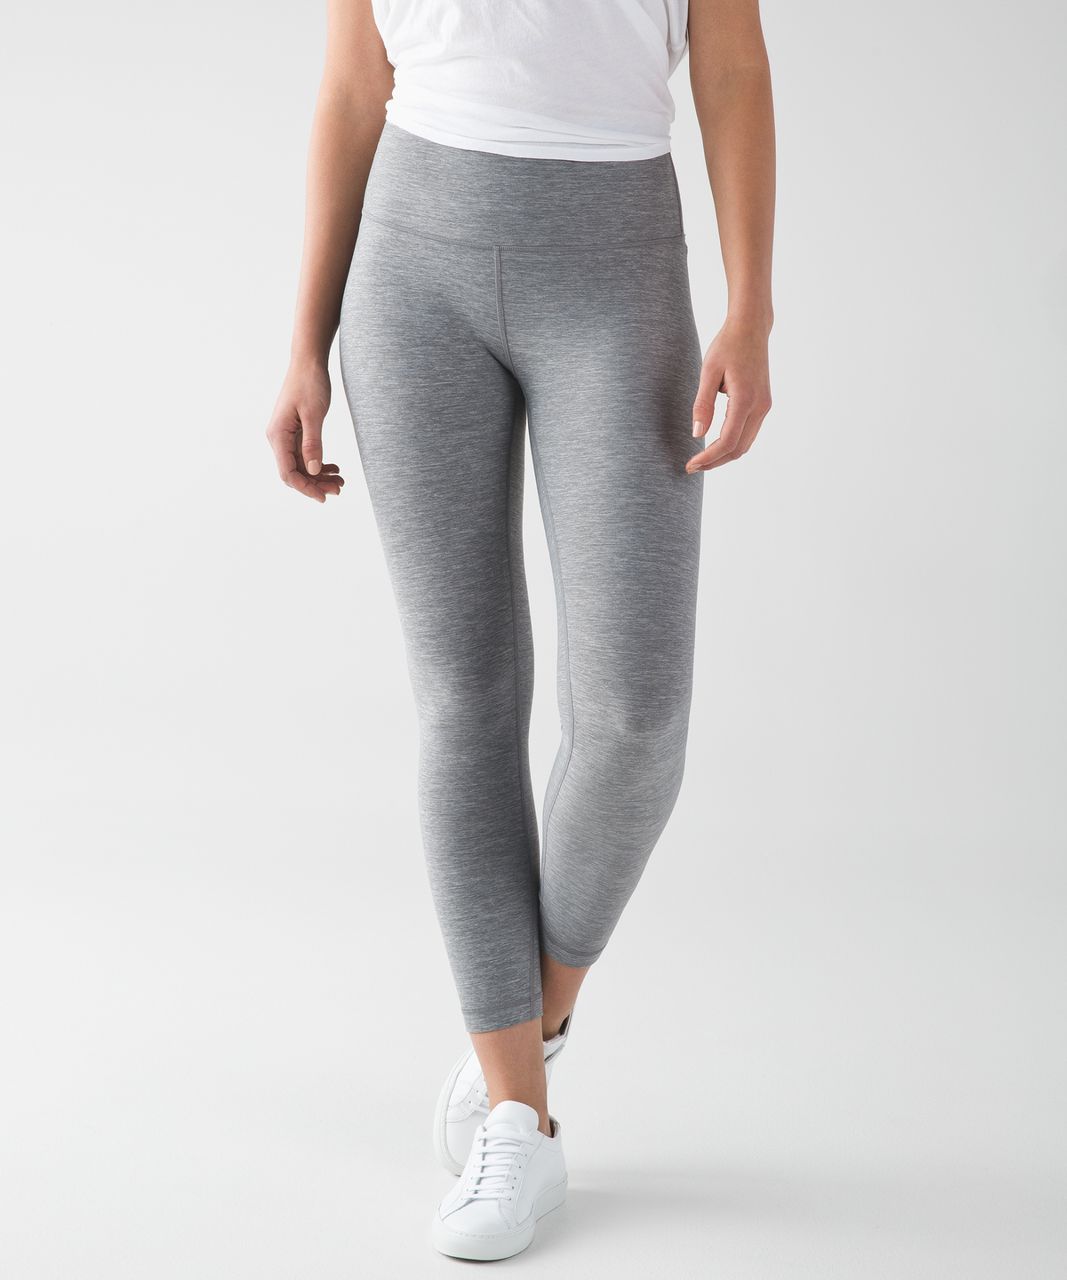 Lululemon Capri Leggings Yoga Pants Women's Size 8 Training Workout Black  5838